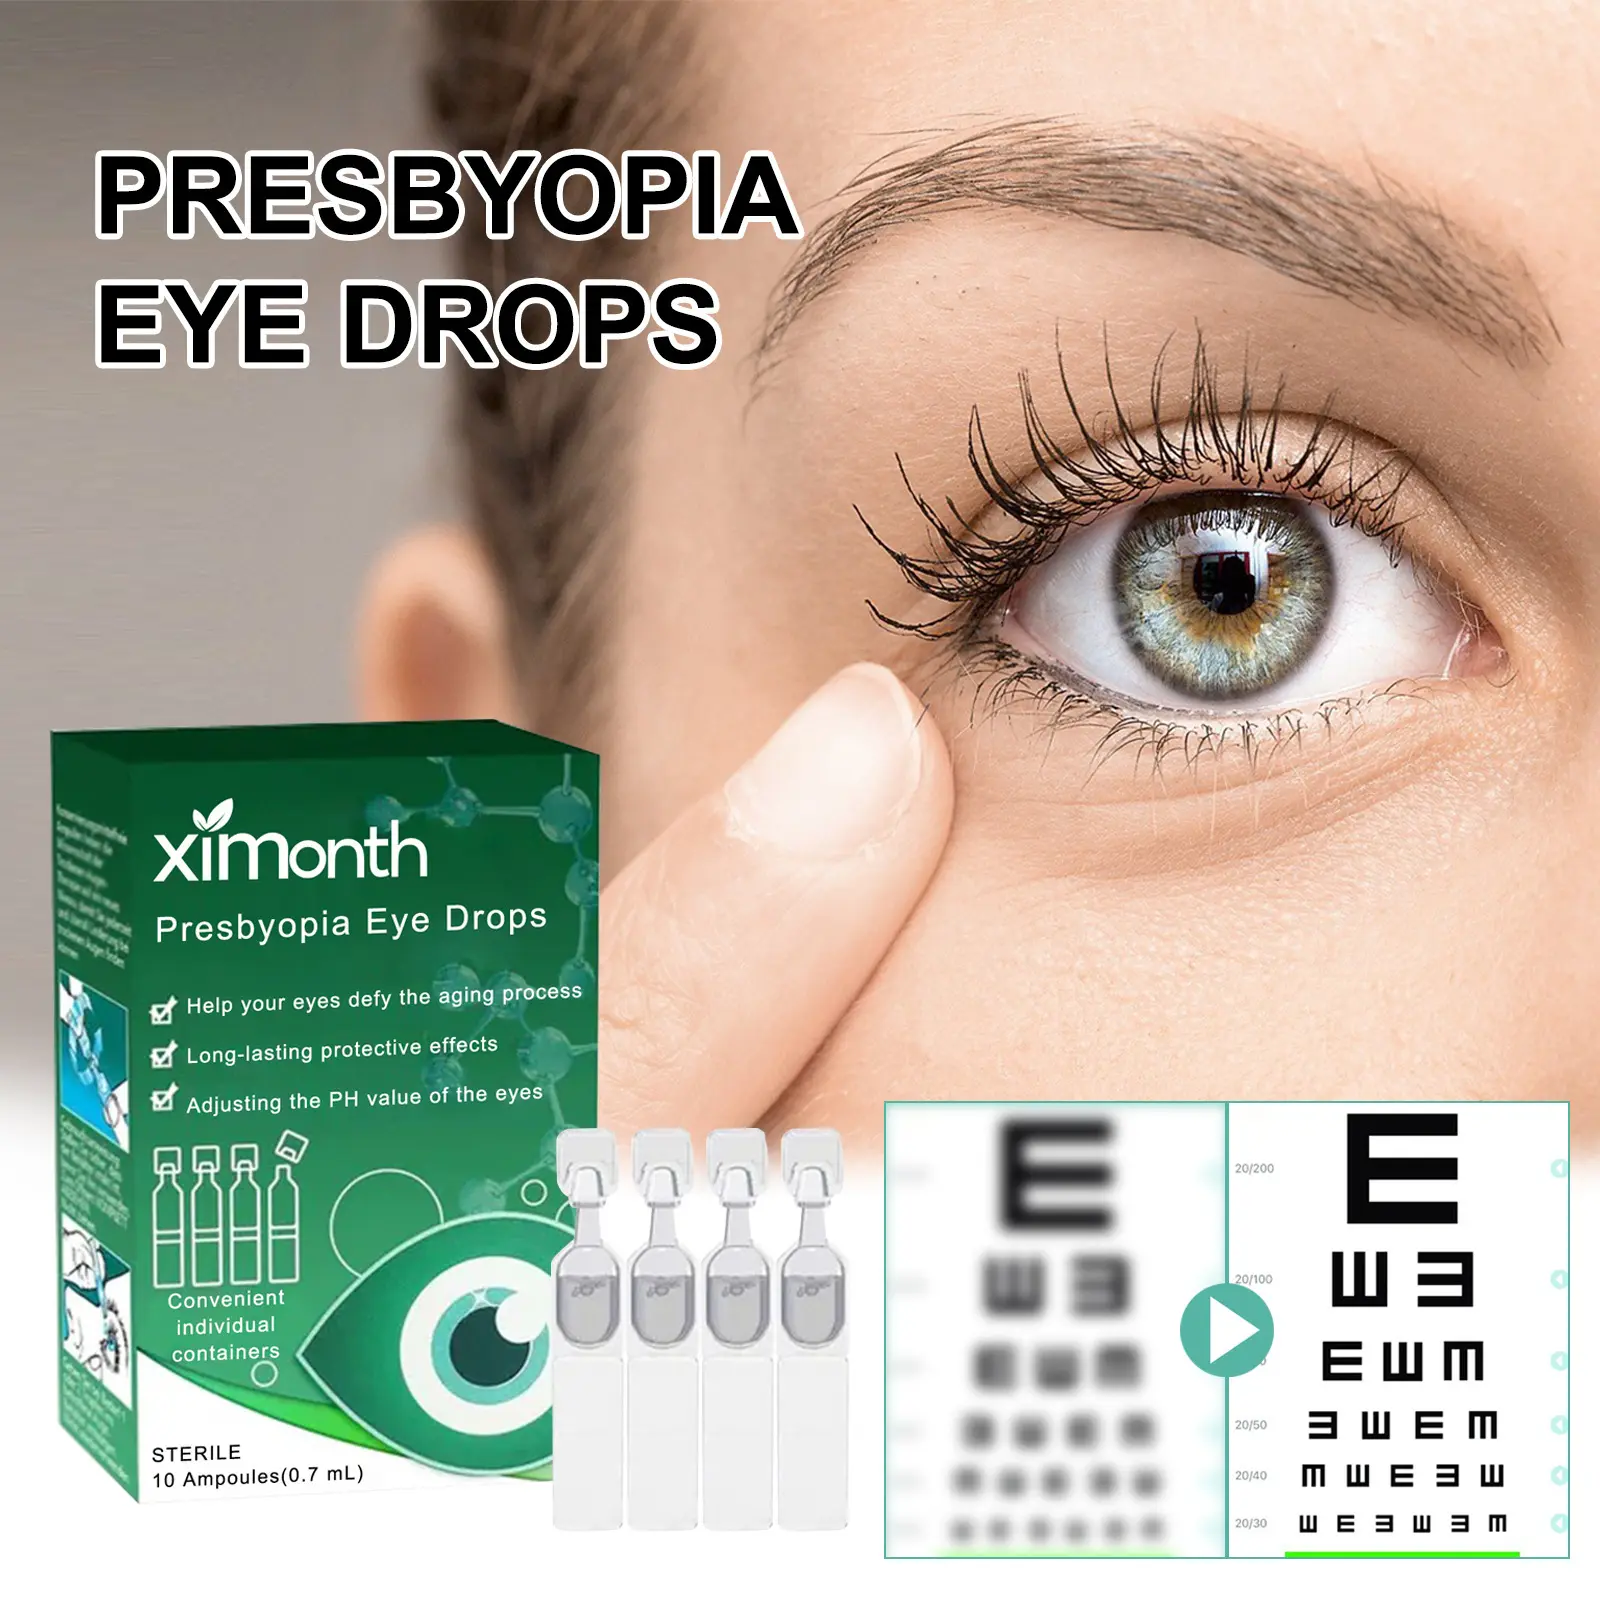 Ximonth mata bening kualitas tinggi mengurangi mata merah gatal kering menenangkan pandangan asphenopia perawatan melindungi penglihatan